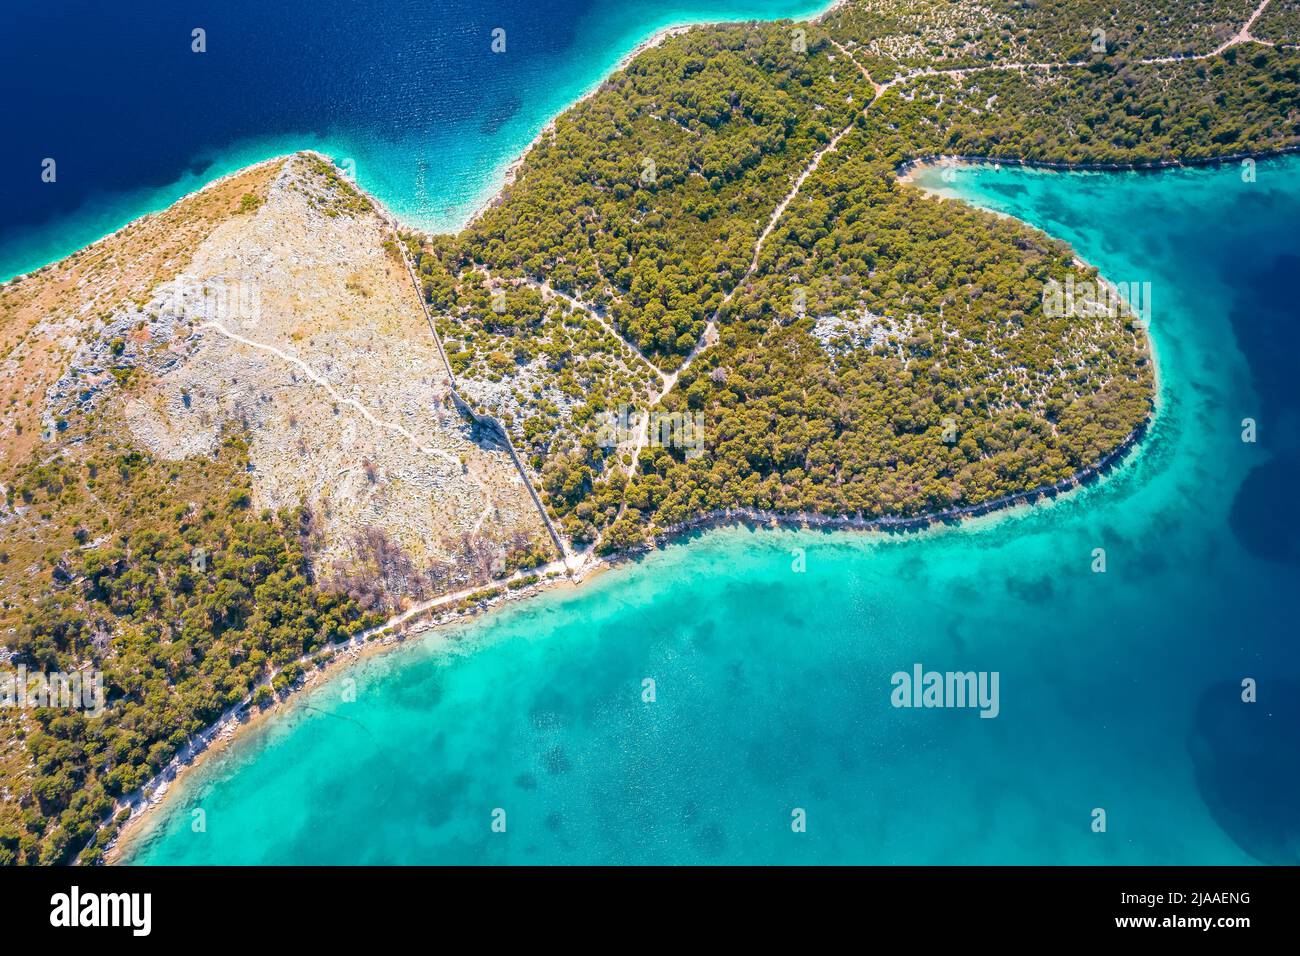 Grebastica turquoise bay and Ostrica historic defence wall ruins aerial view, Dalmatia archipelago of Croatia Stock Photo